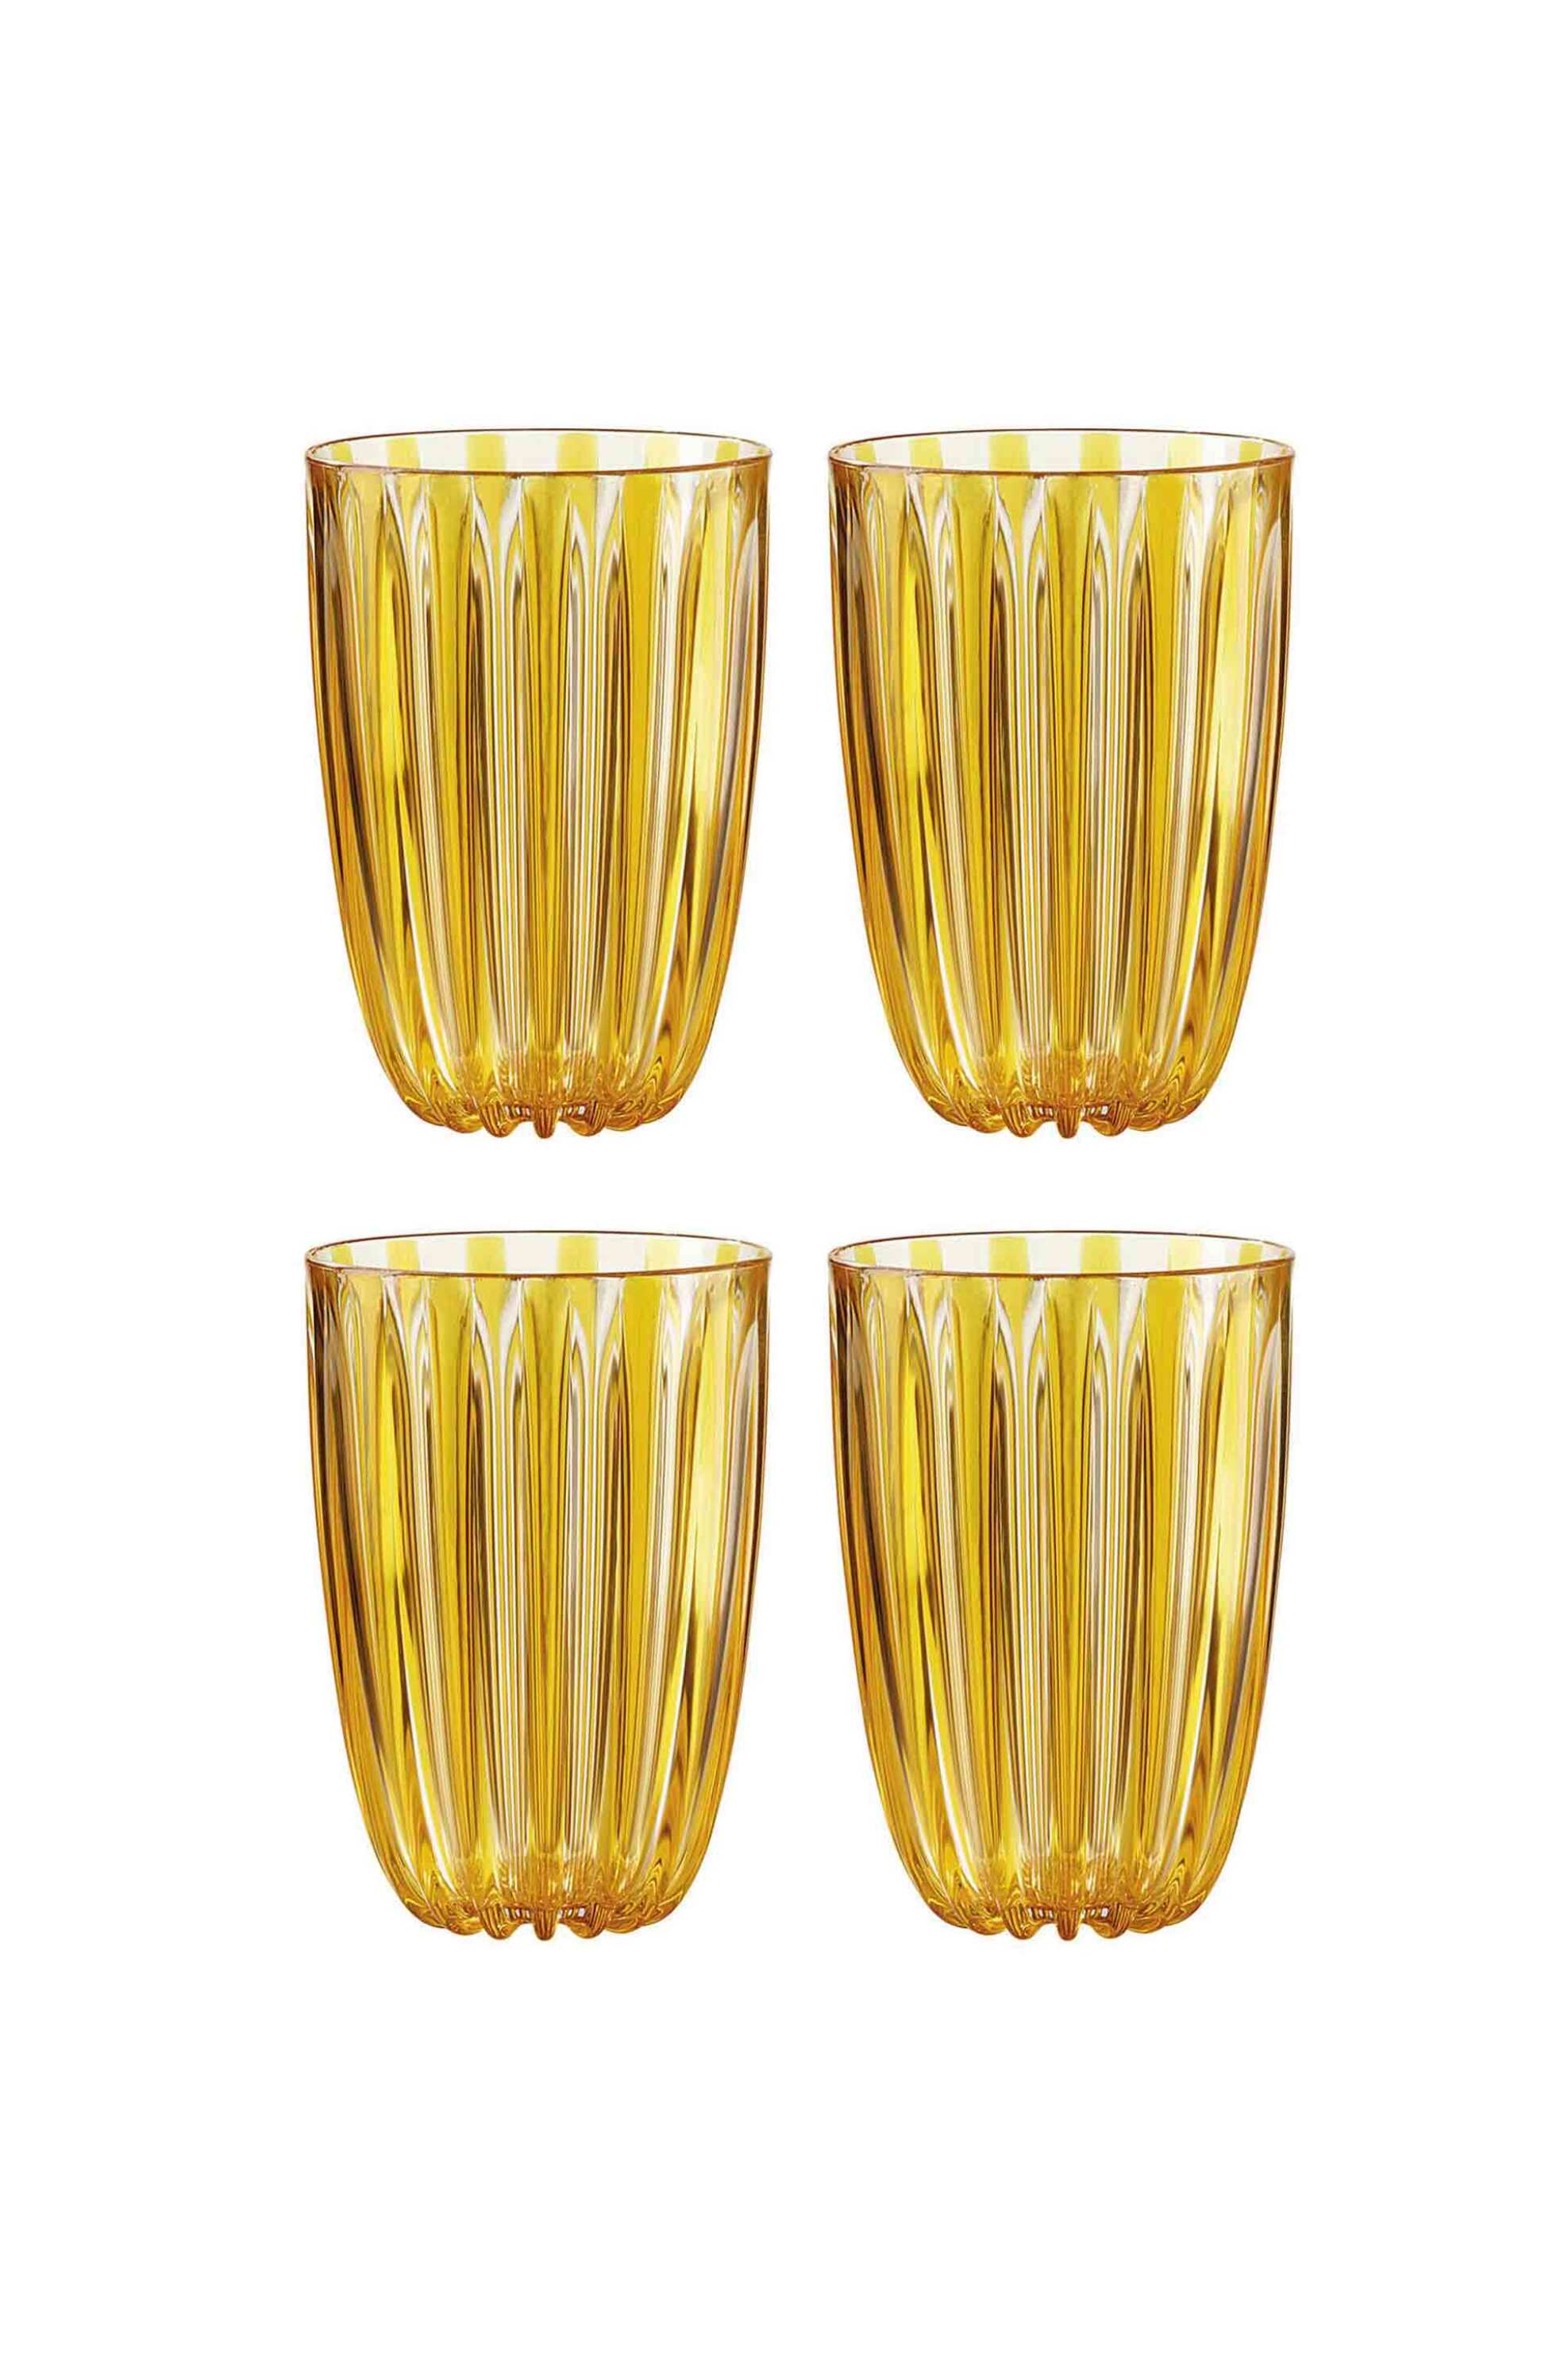 Home > ΚΟΥΖΙΝΑ > Υαλικά > Ποτήρια Guzzini σετ ποτήρια πλαστικά με ανάγλυφο σχέδιο "Dolcevita" 9 x 12,8 cm - 8008392357414